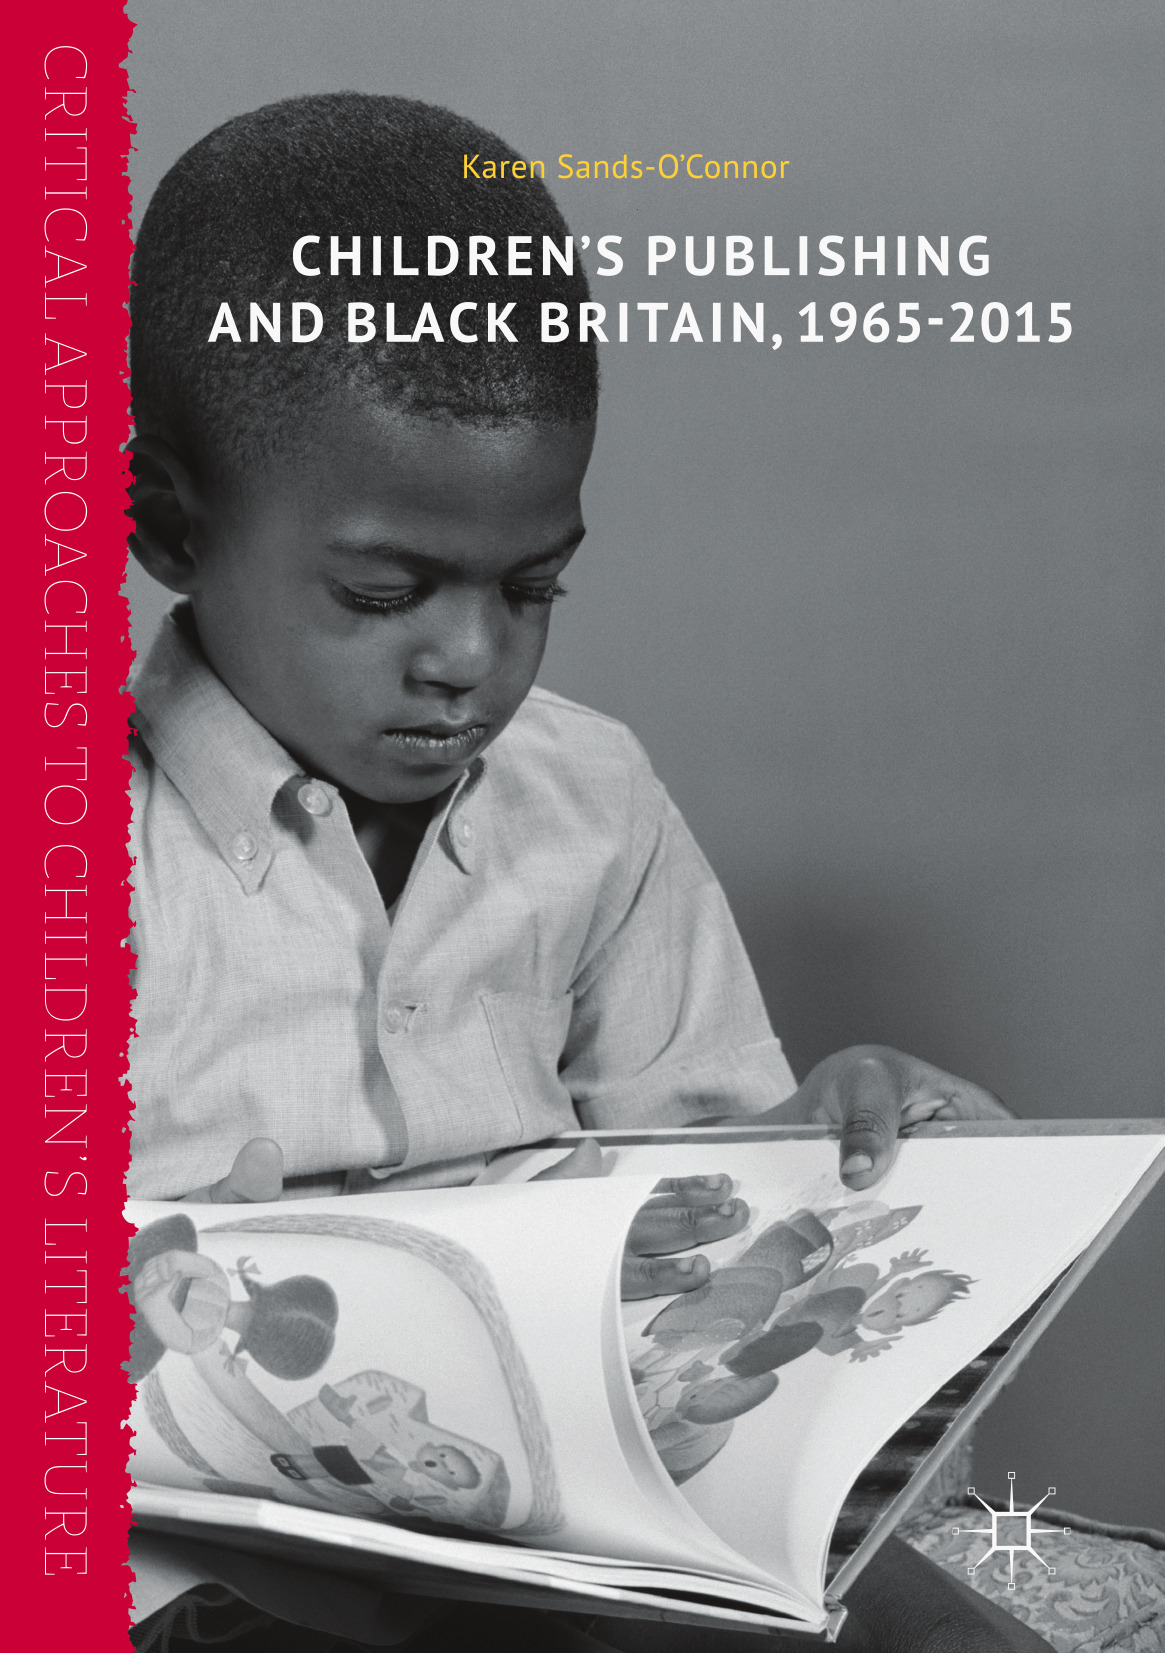 Sands-O'Connor, Karen - Children’s Publishing and Black Britain, 1965-2015, ebook